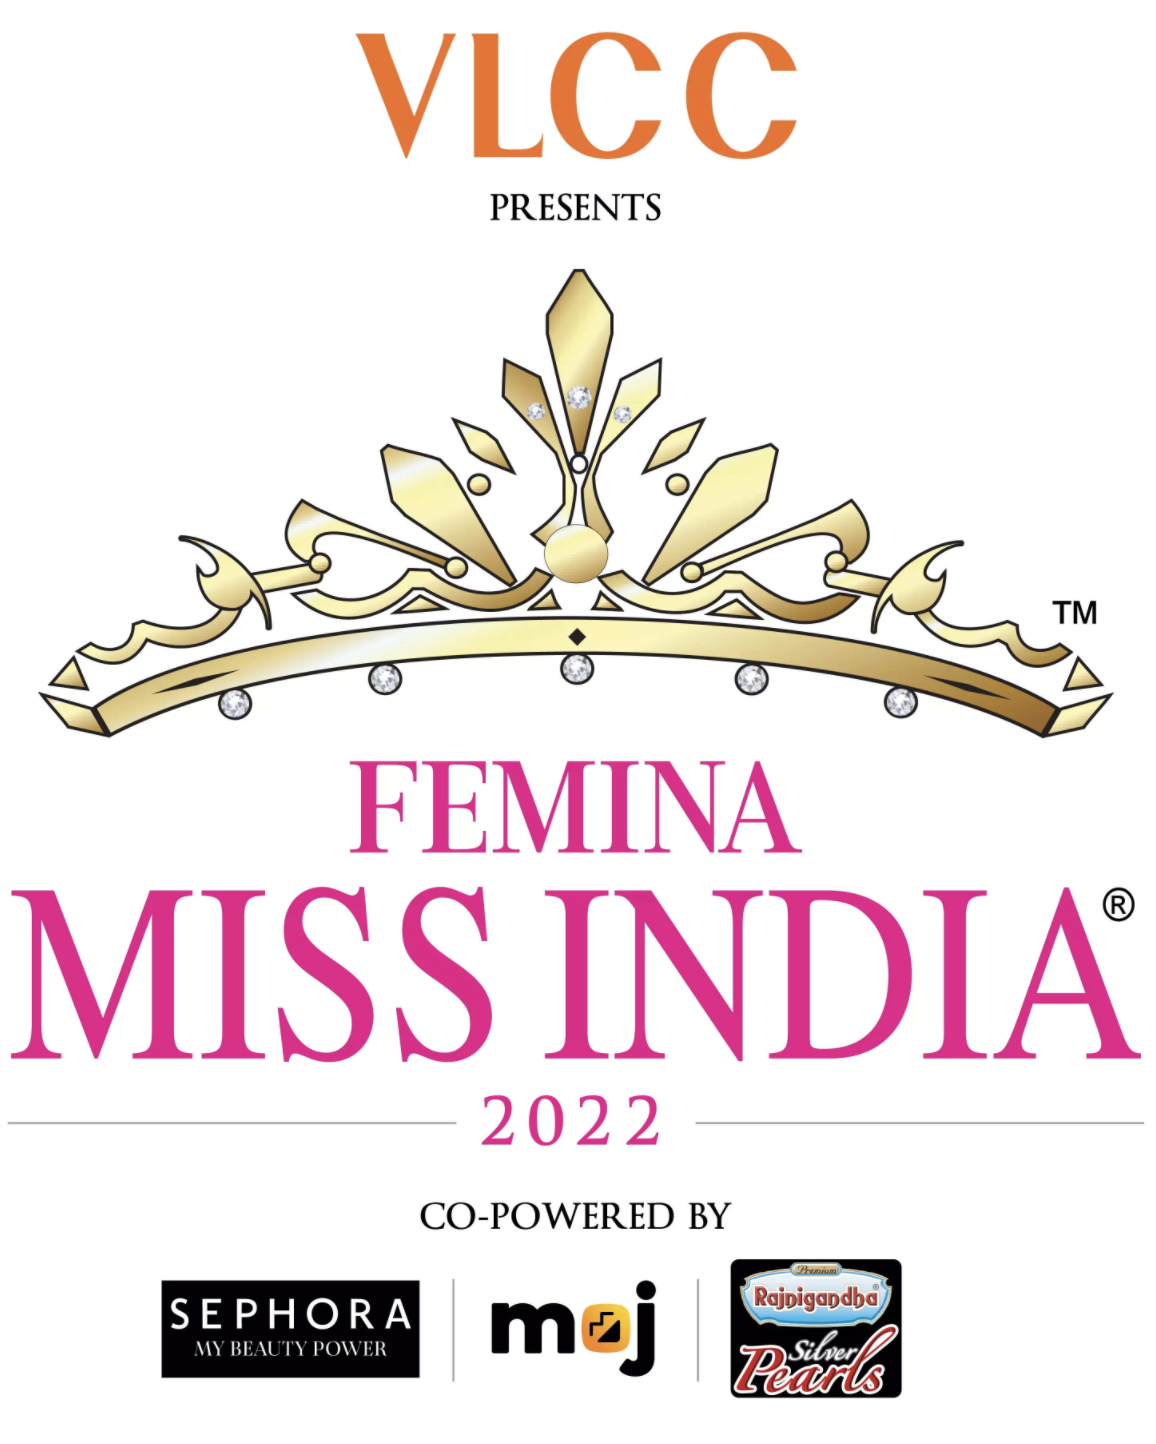  karnataka vence femina miss india 2022.   - Página 3 JKVZnj